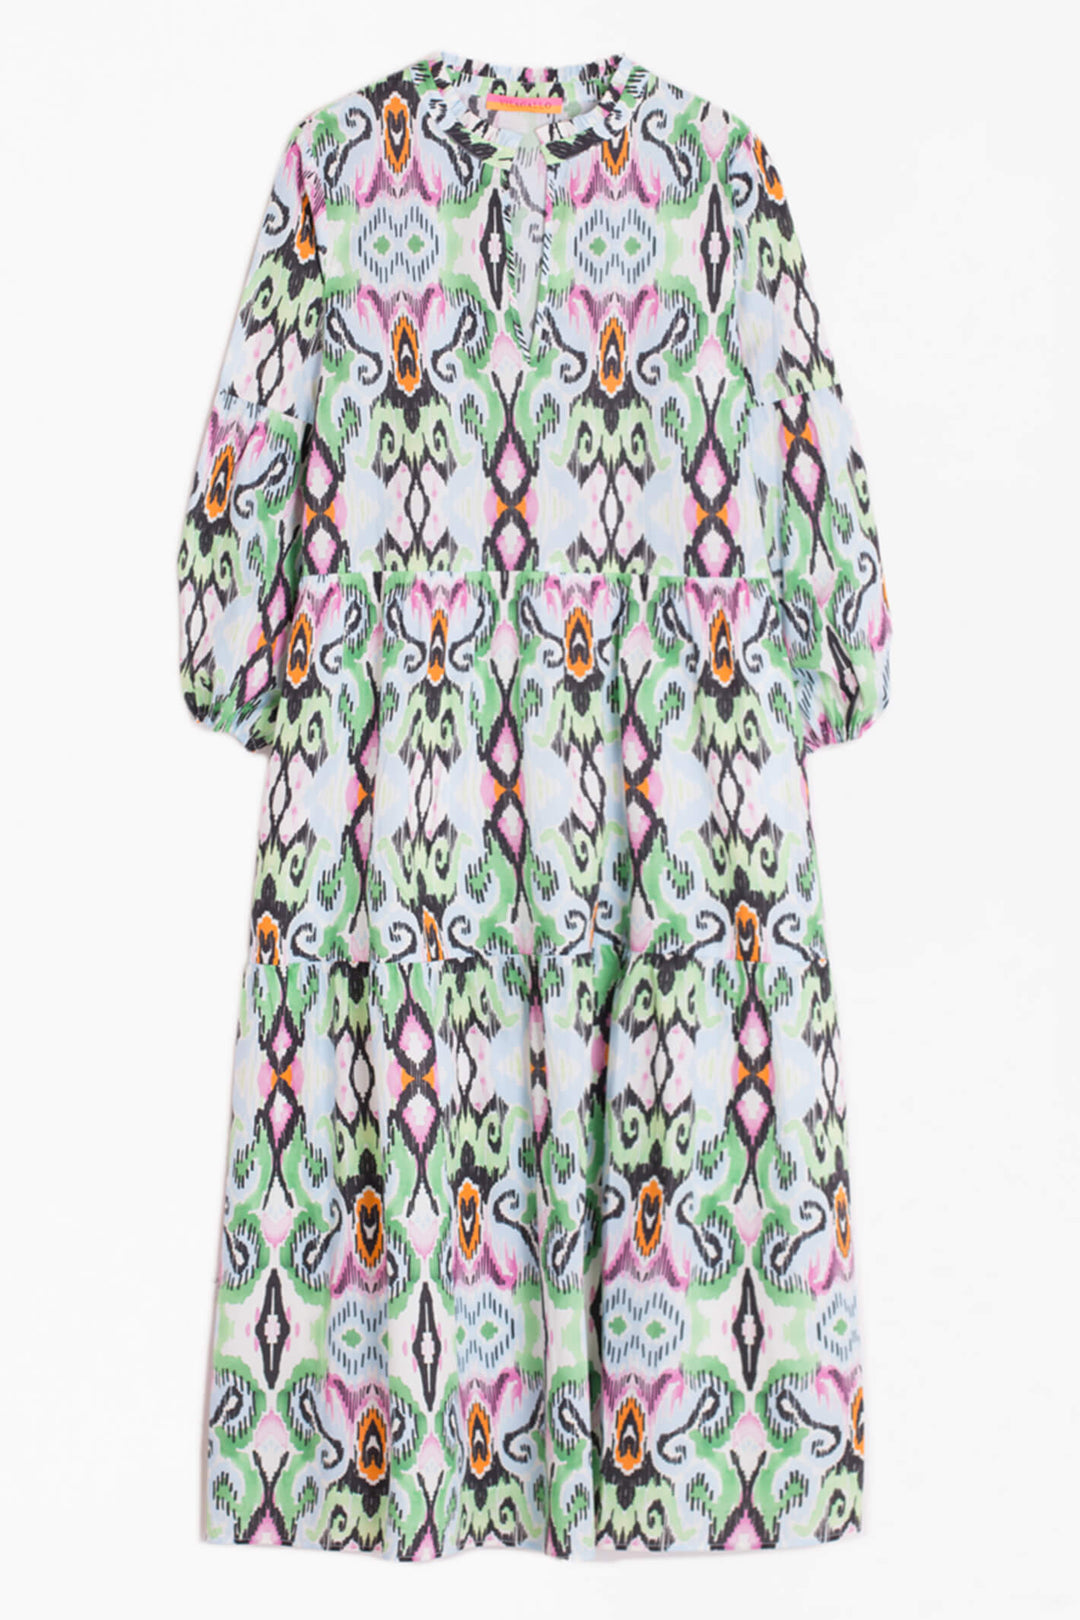 Vilagallo 30024 Tammy Green Print Dress - Shirley Allum Boutique